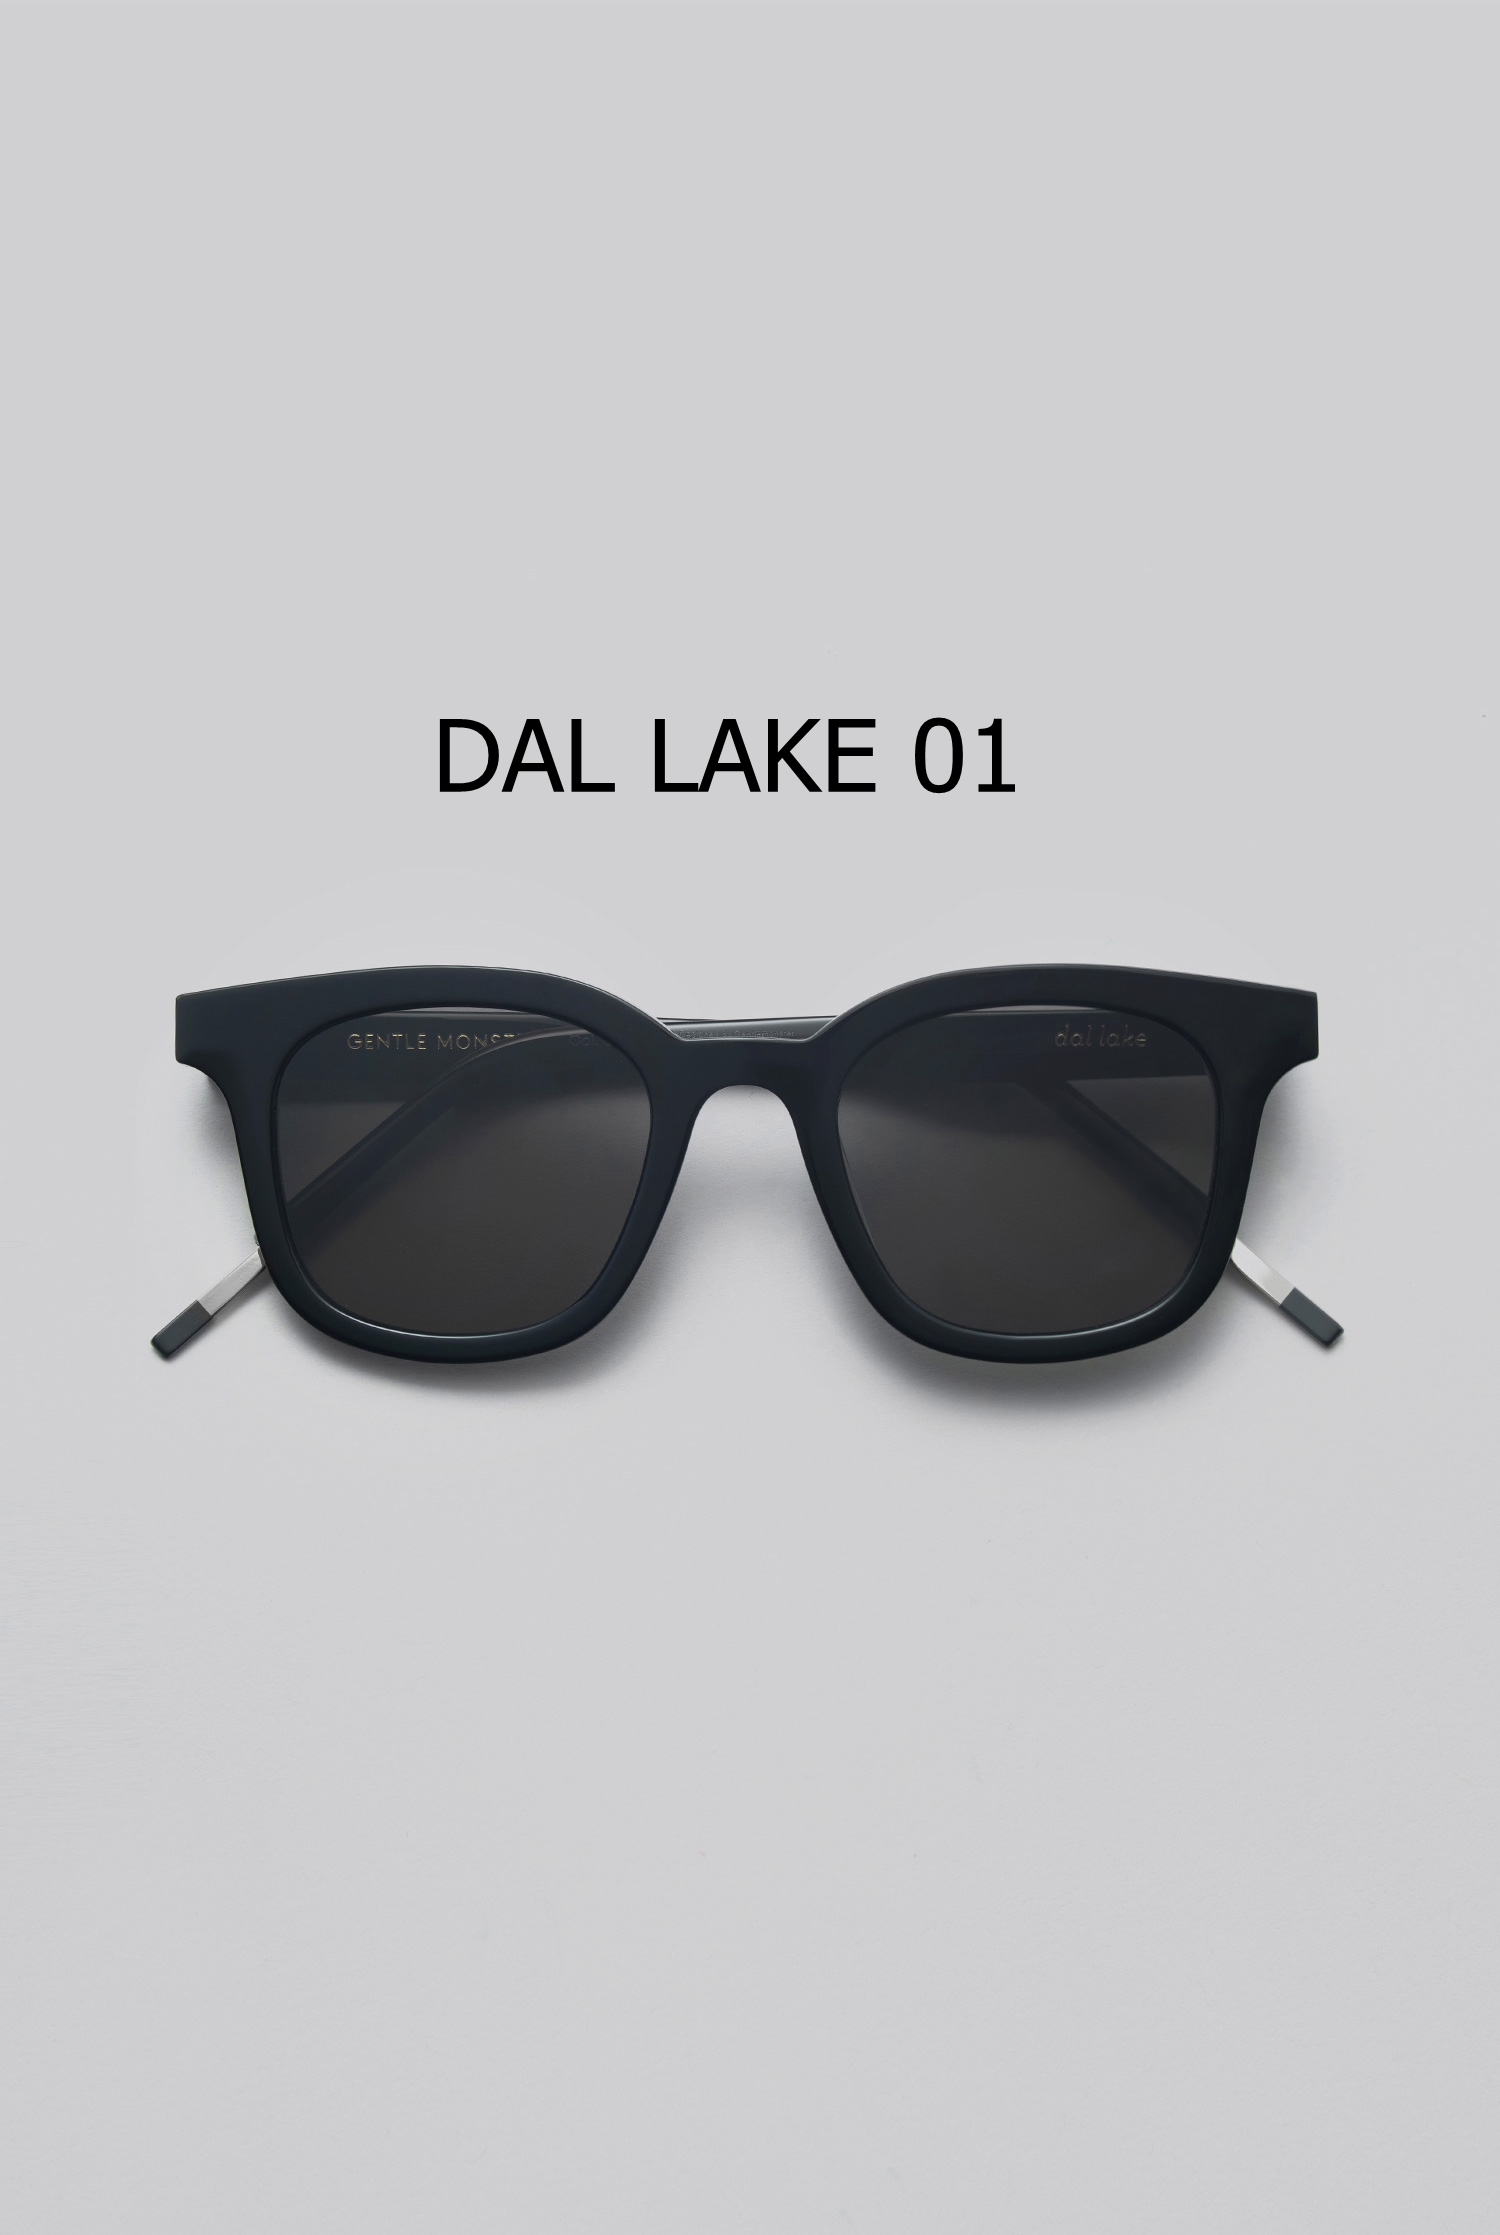 DAL LAKE 01